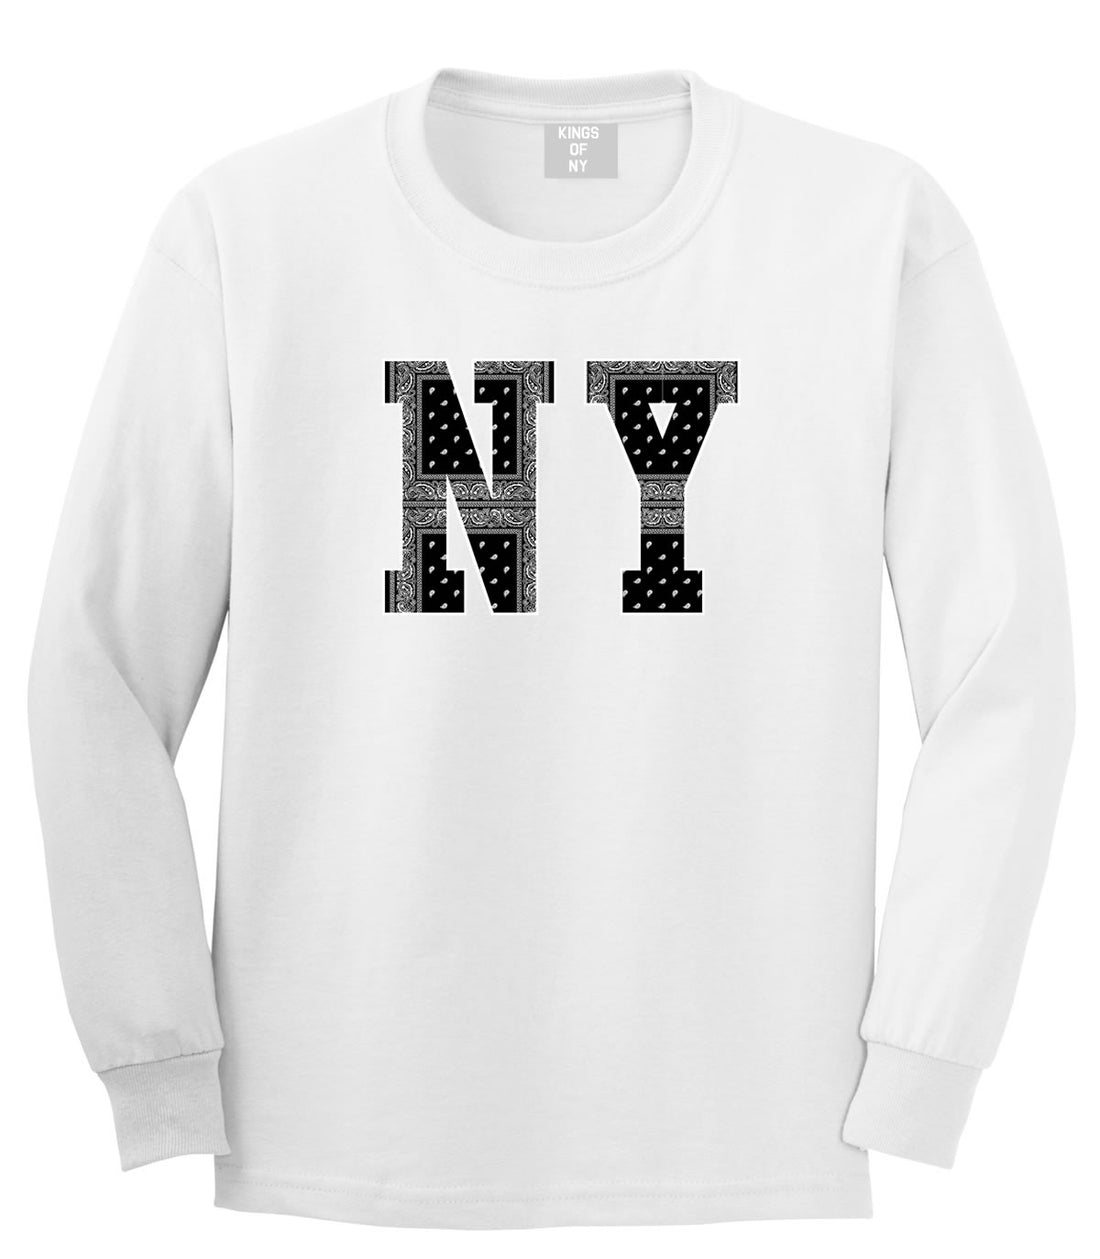 New York Bandana NYC Black by Kings Of NY Gang Flag Long Sleeve Boys Kids T-Shirt in White by Kings Of NY